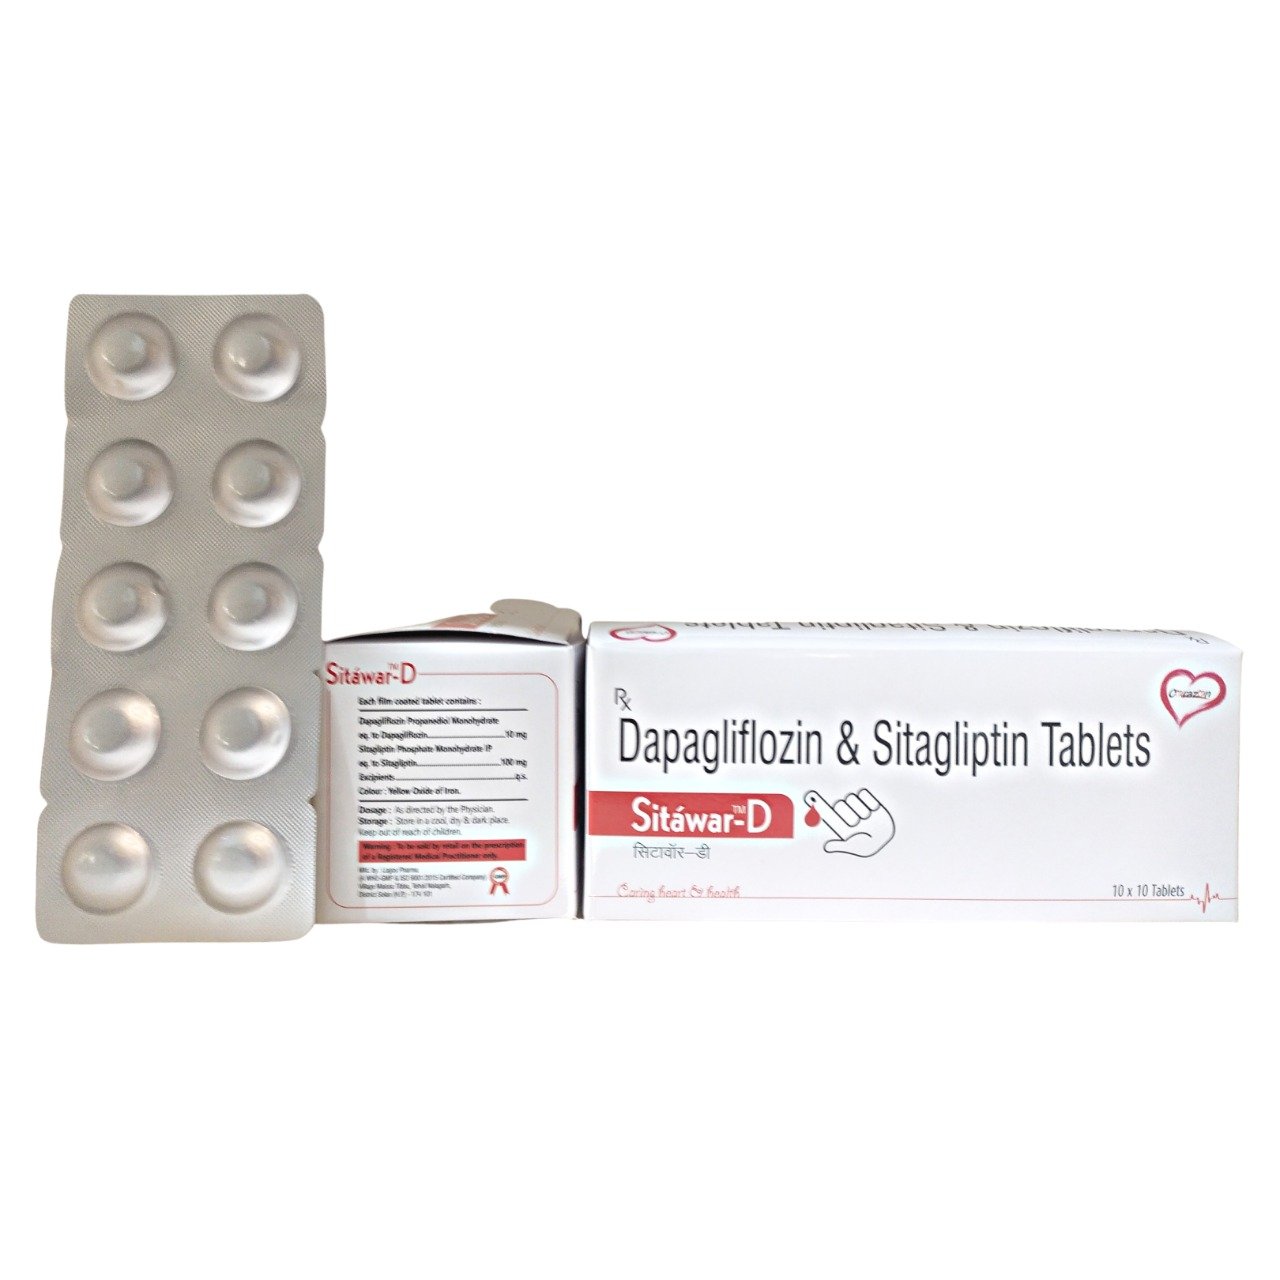 Dapagliflozin 10 mg with Sitagliptin 100 mg